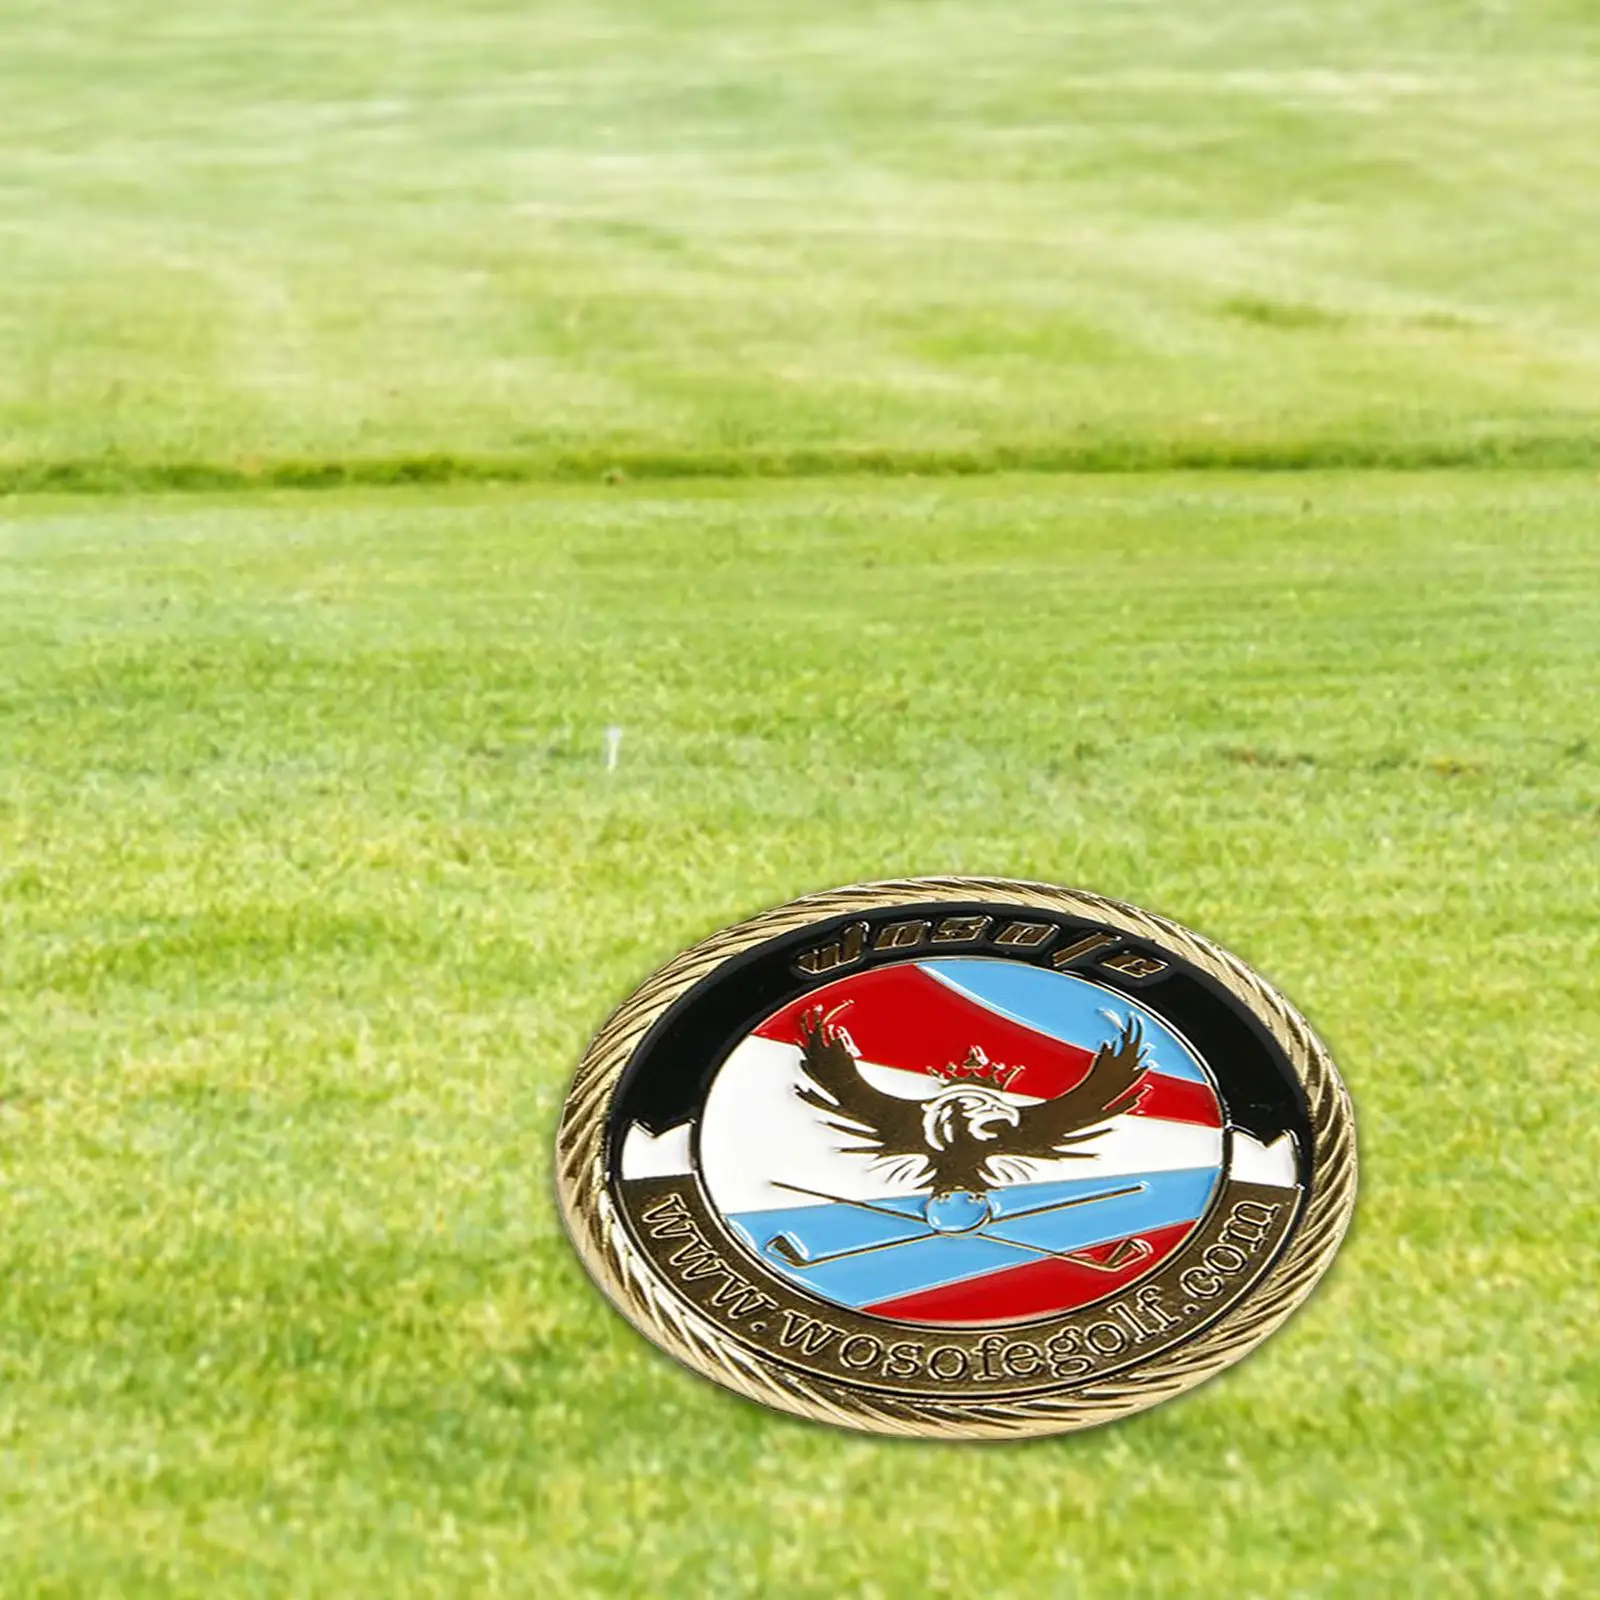 Zinc Alloy Funny Golf Ball Marker, Women Men Magnetic Putt Sign Position Mark Club Giveaways Keepsake Golfer Gift Accessories